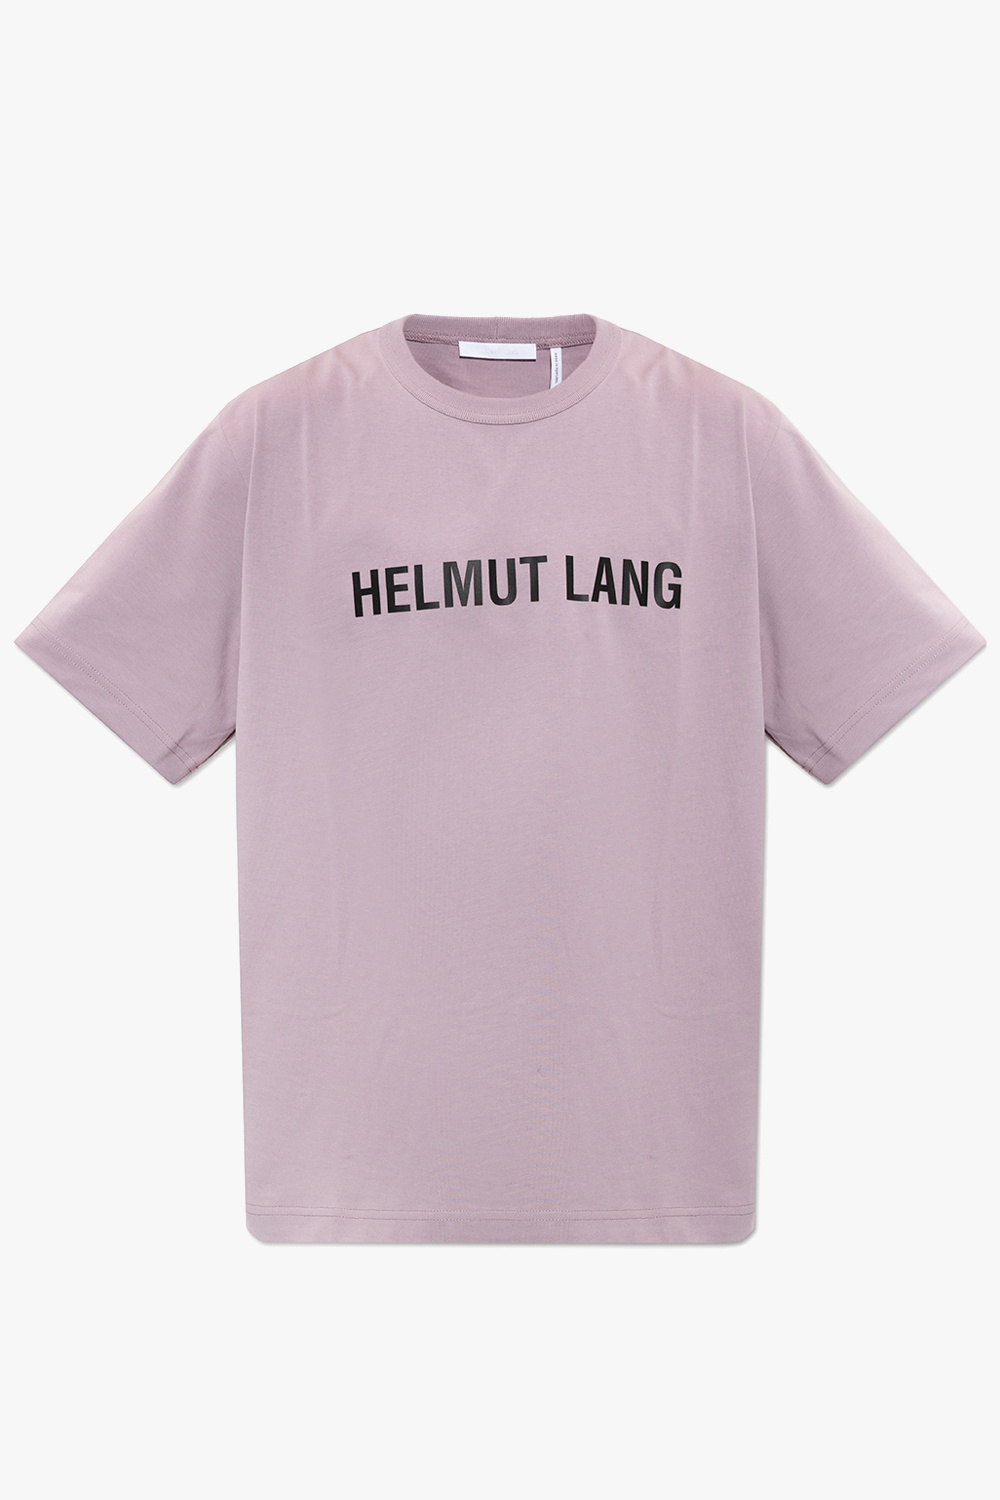 Helmut Lang T-shirt Mostarda with logo